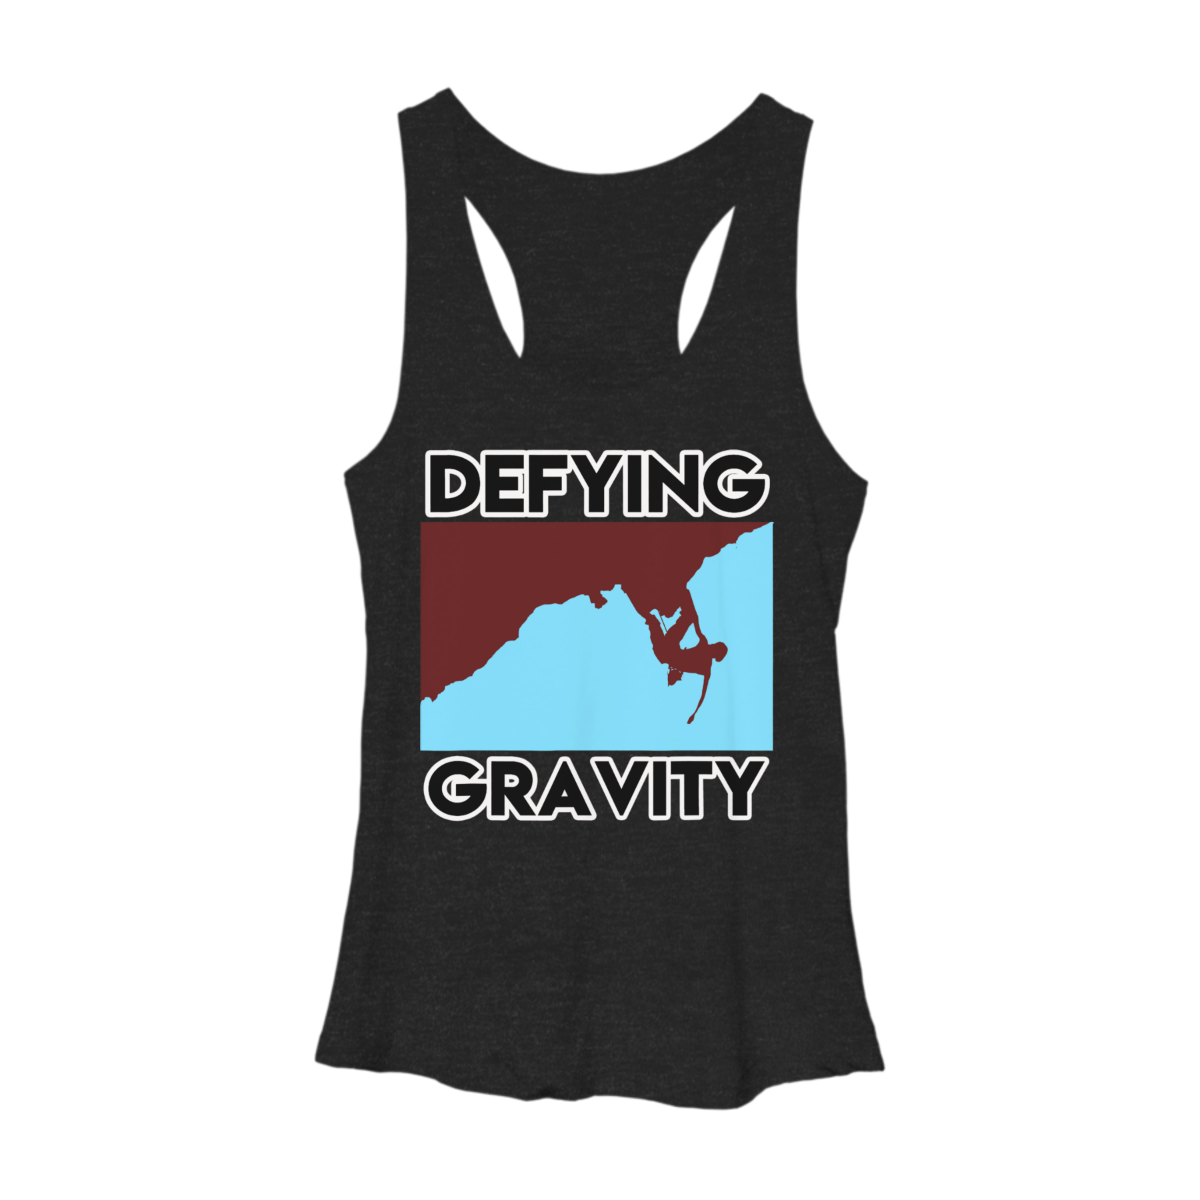 defying gravity t shirts